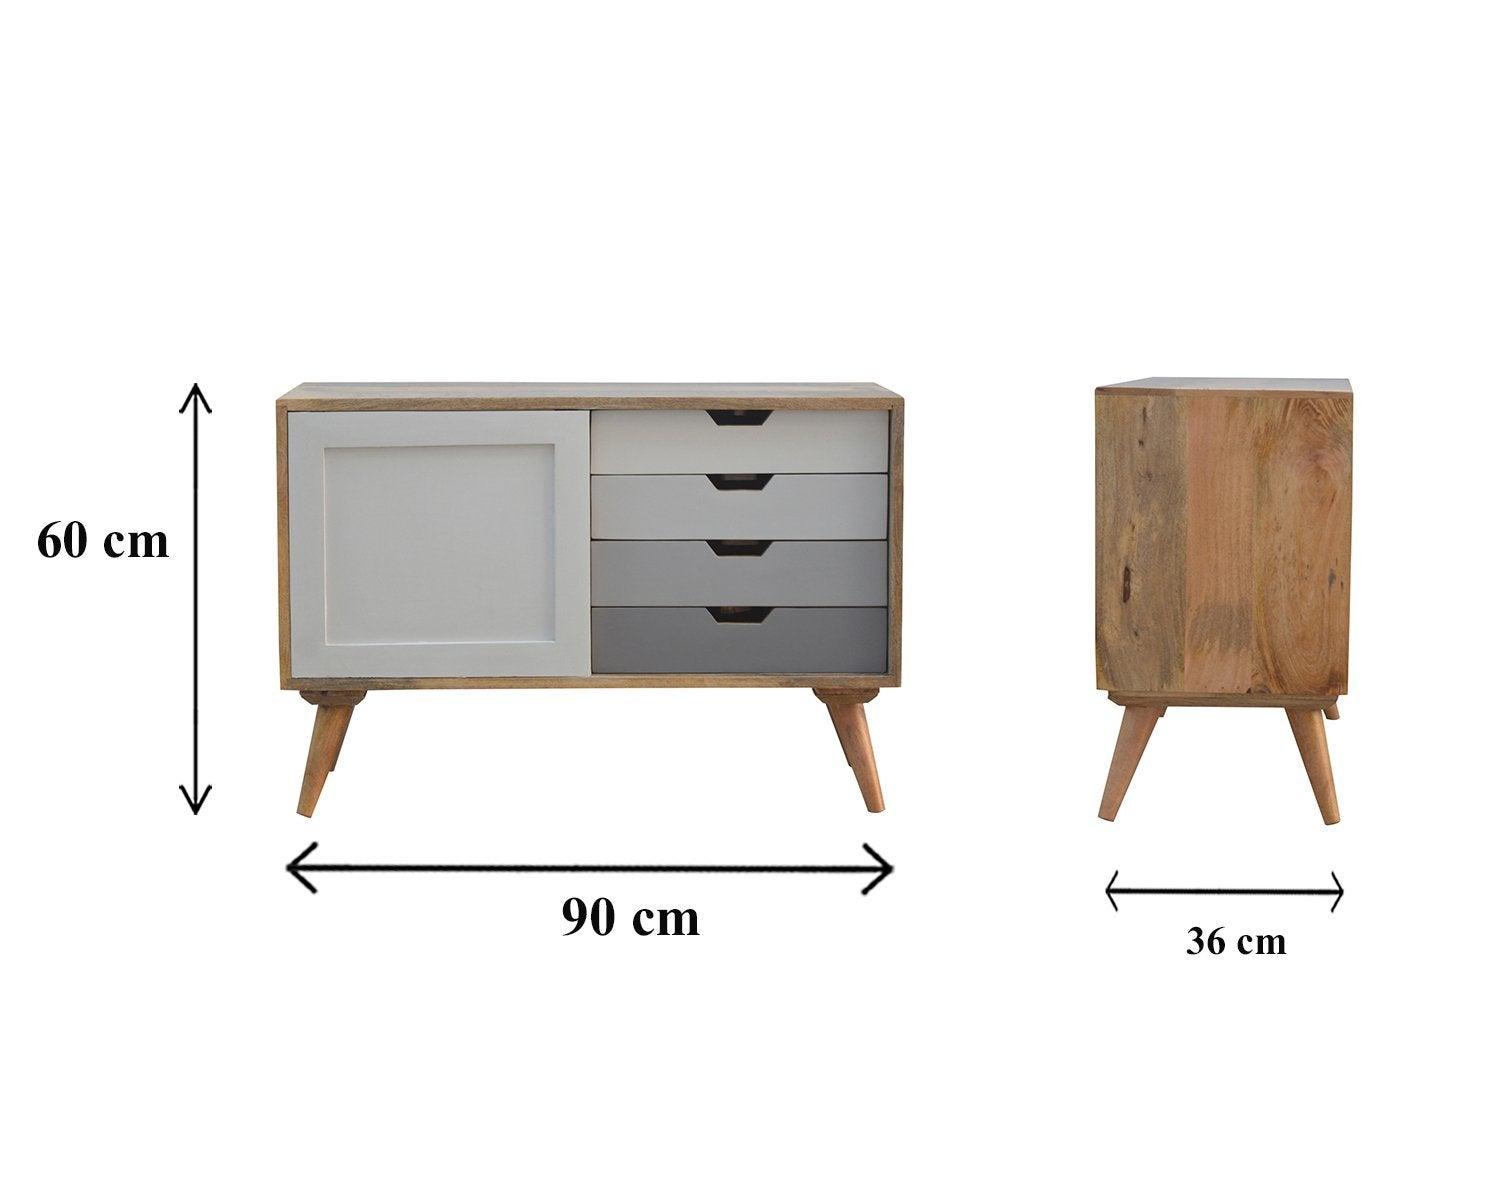 Nordic sliding cabinet with 4 drawers - crimblefest furniture - image 14